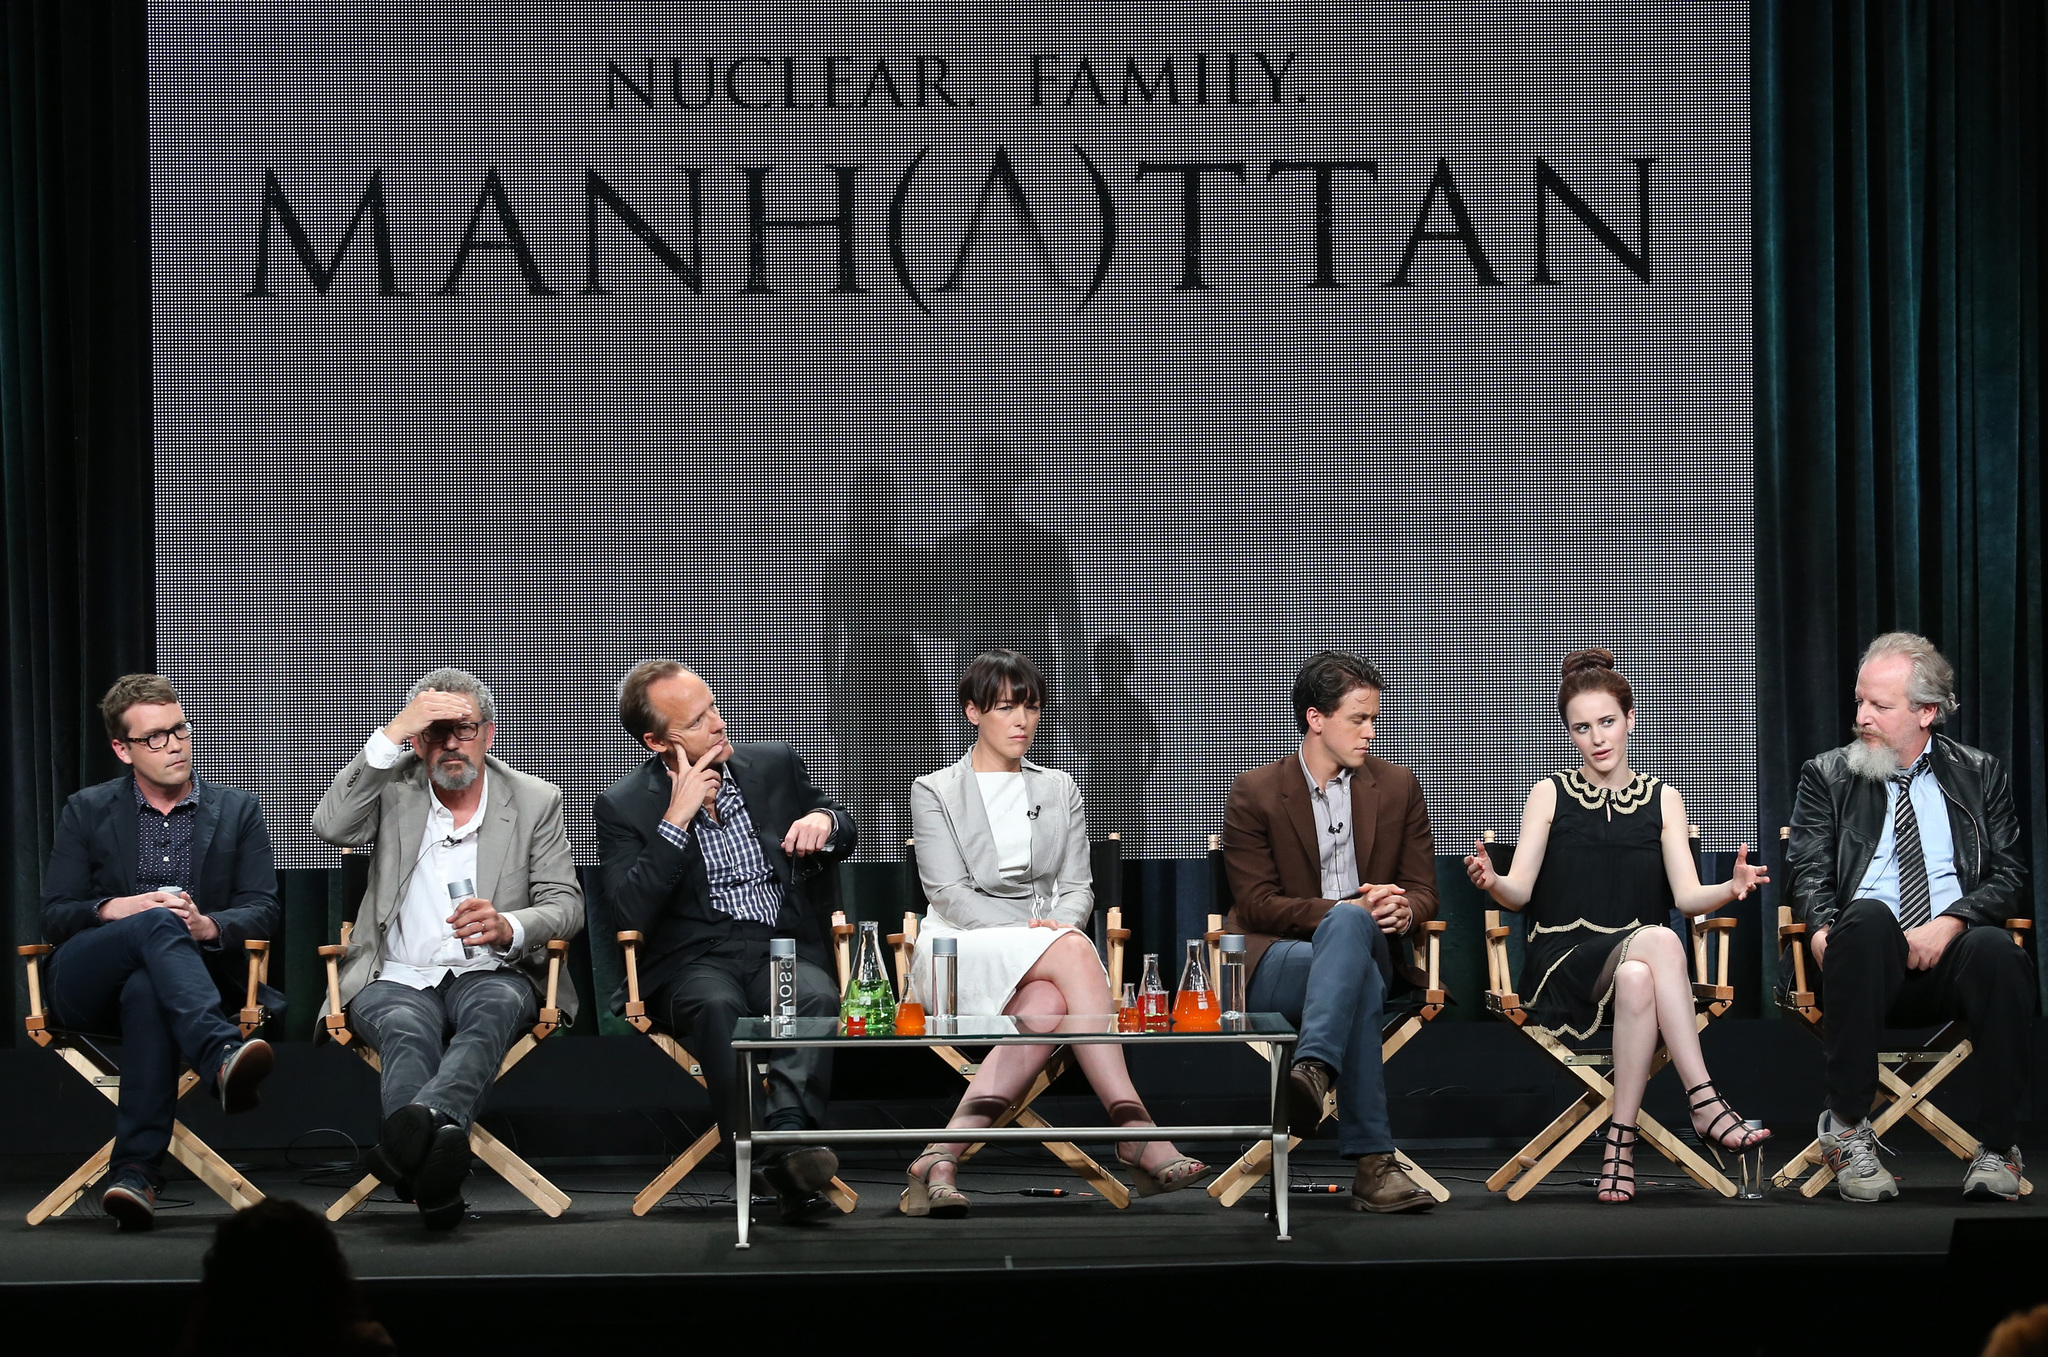 John Benjamin Hickey, Thomas Schlamme, Daniel Stern, Olivia Williams, Sam Shaw and Rachel Brosnahan at event of Manhattan (2014)